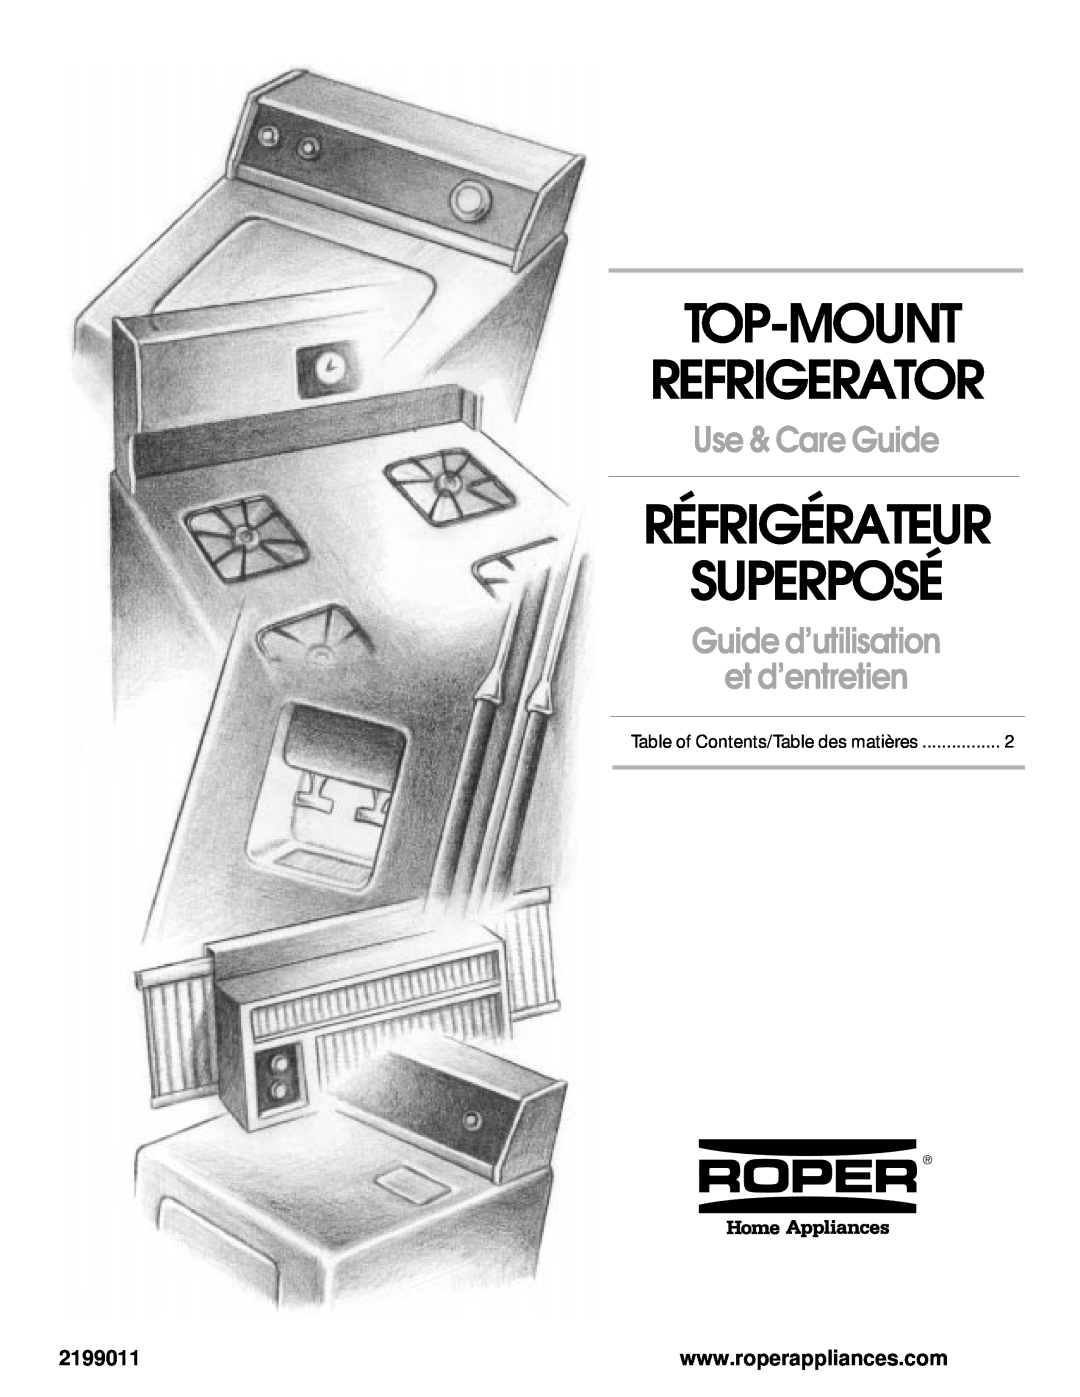 Whirlpool 2199011 manual Top-Mount Refrigerator, Use & Care Guide, Guide d’utilisation et d’entretien, Superposé 